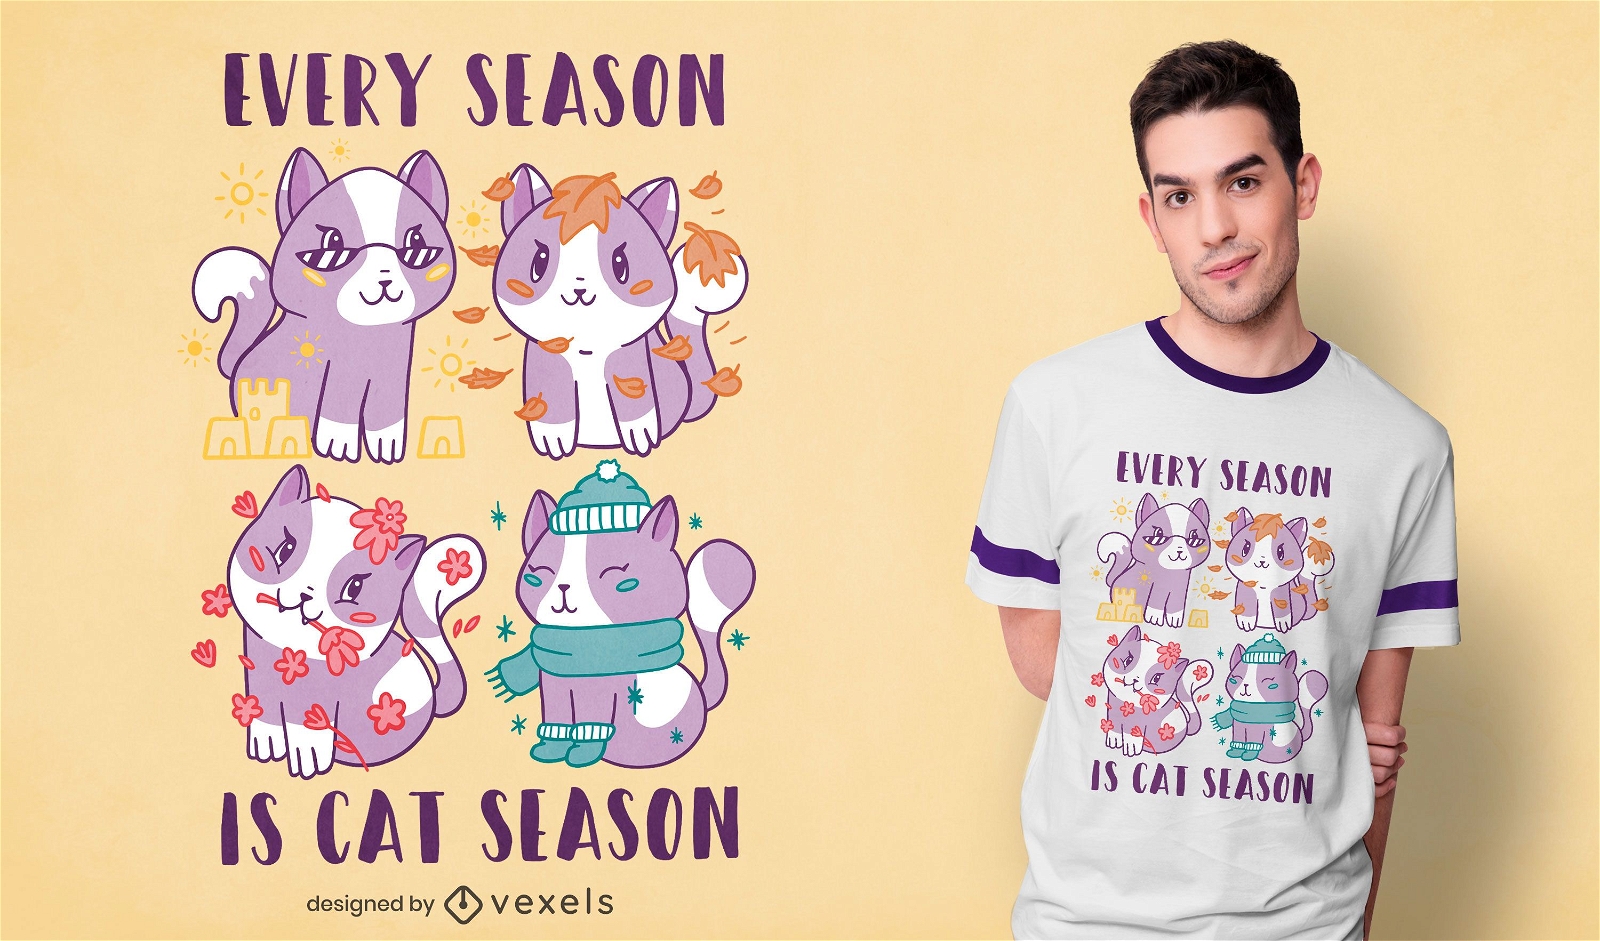 Cat season t-shirt design